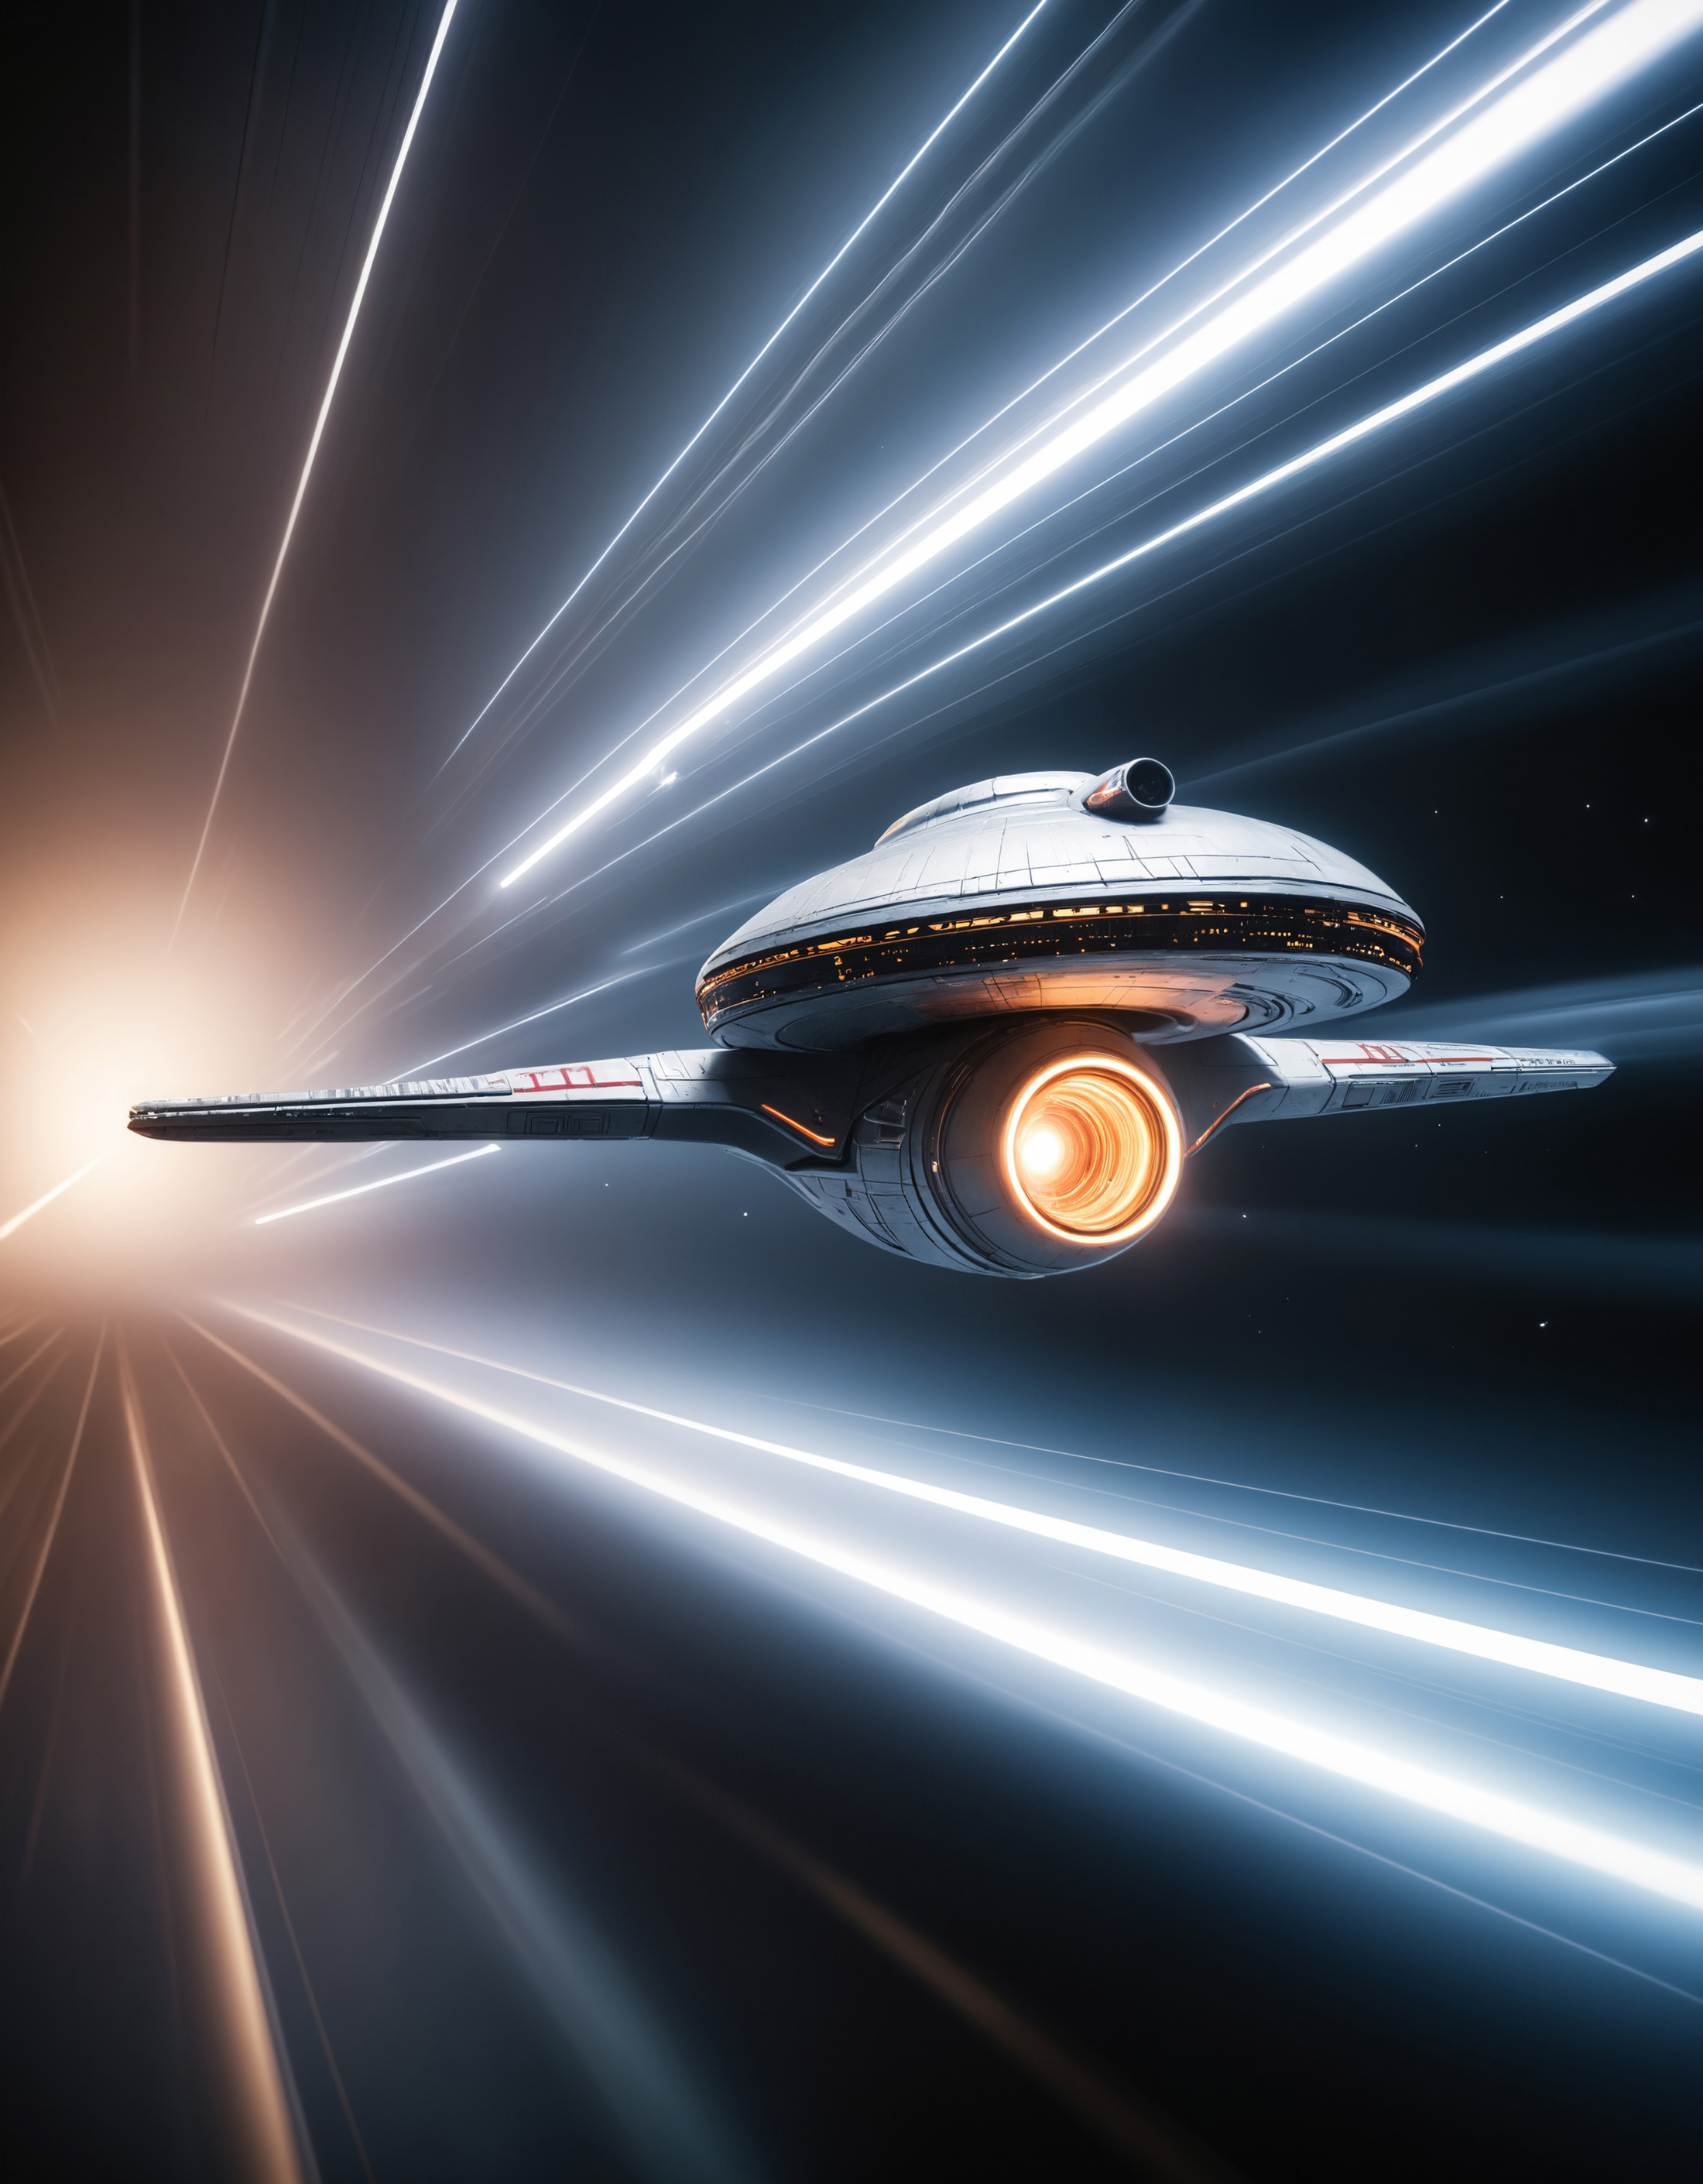 award winning photo of a star trek spaceship enterprise going to warp speed, zavy-lghttrl, atmospheric haze, dynamic angle...